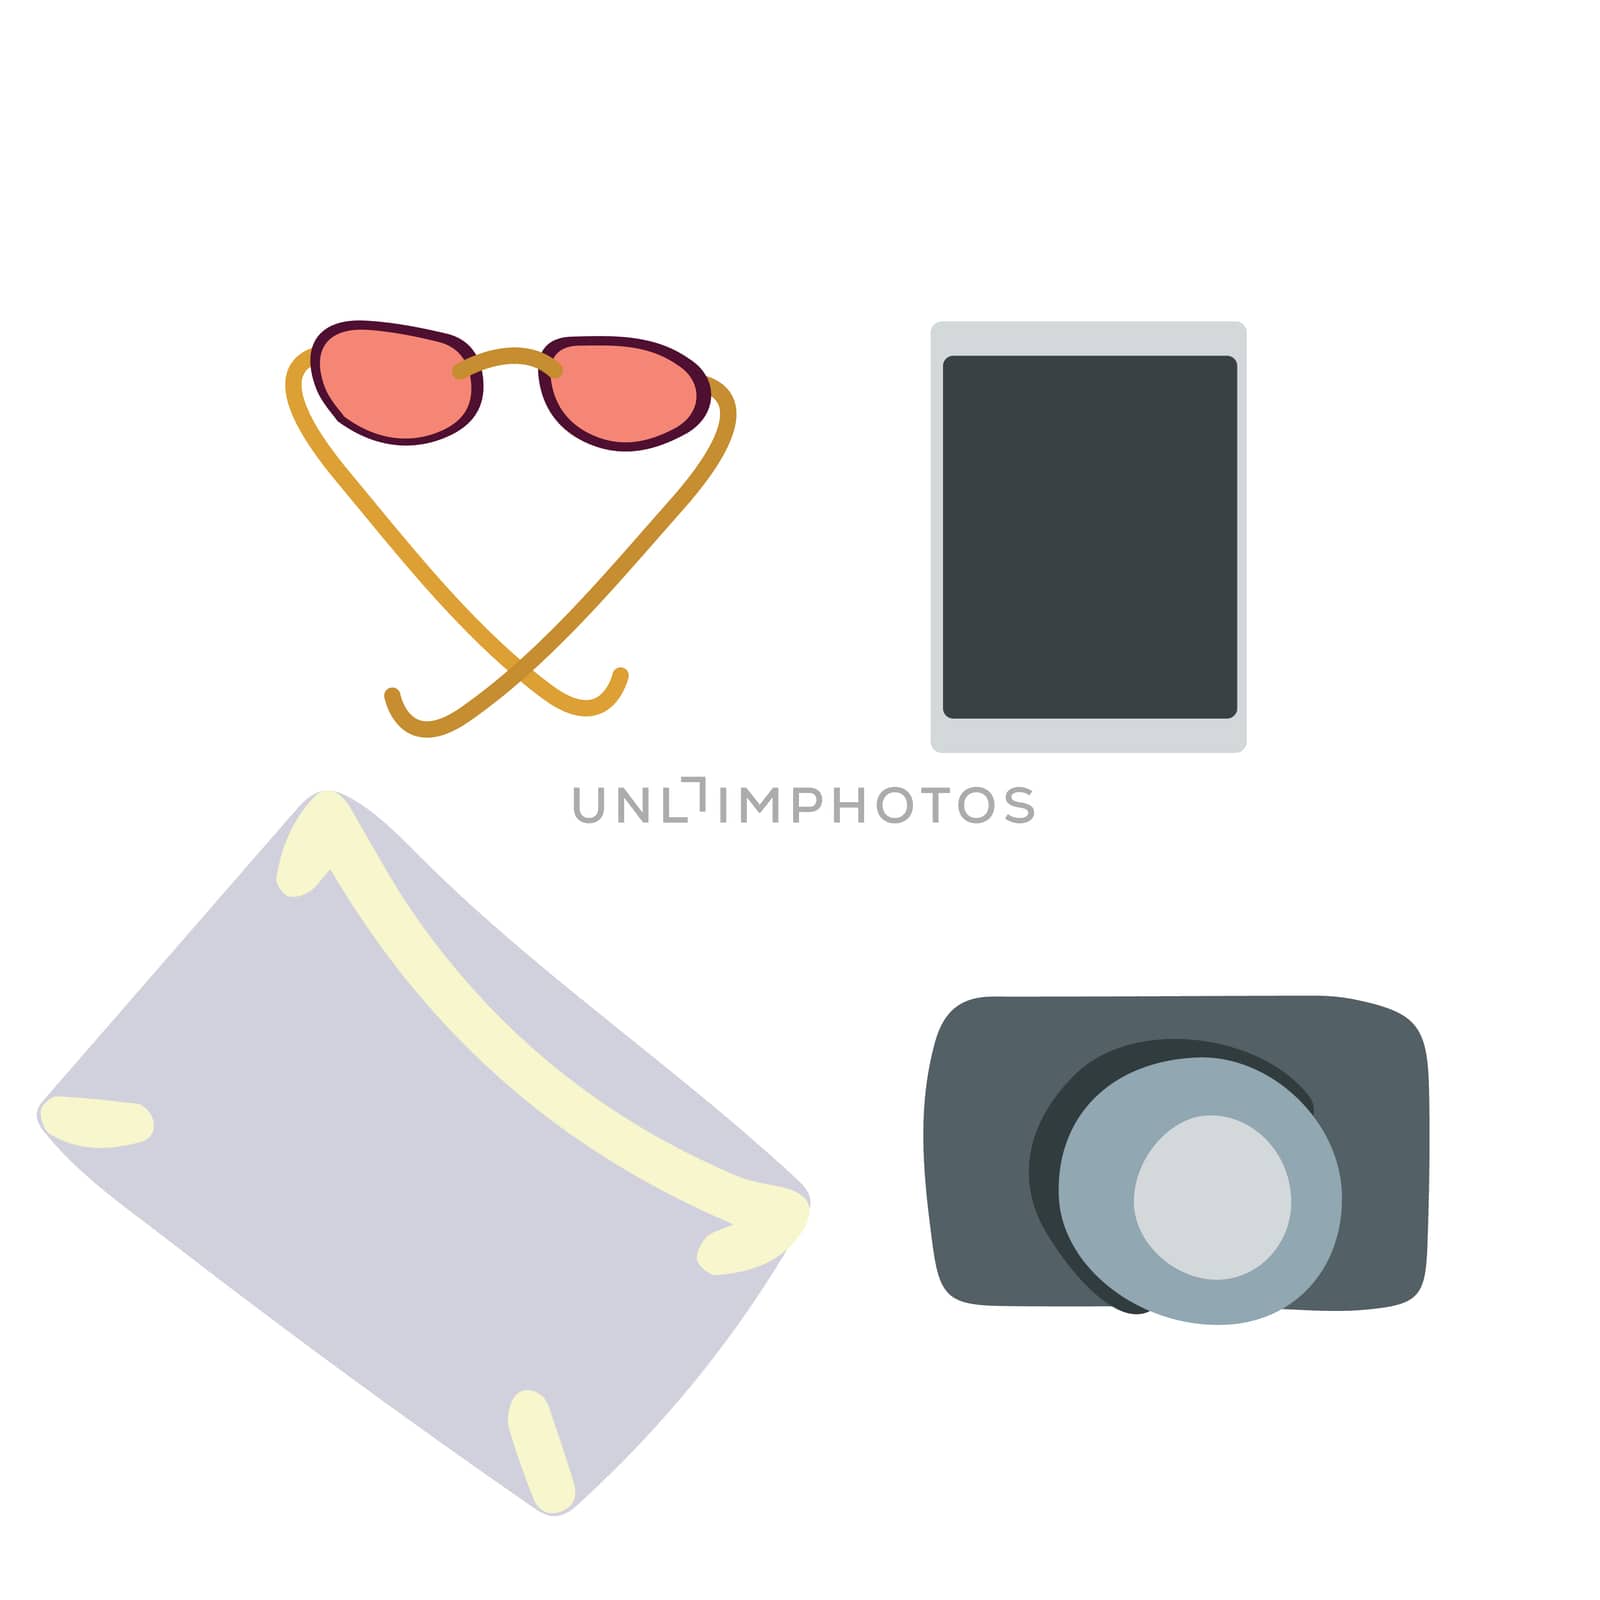 small bag, camera and sunglassses for hand luggage. by Nata_Prando